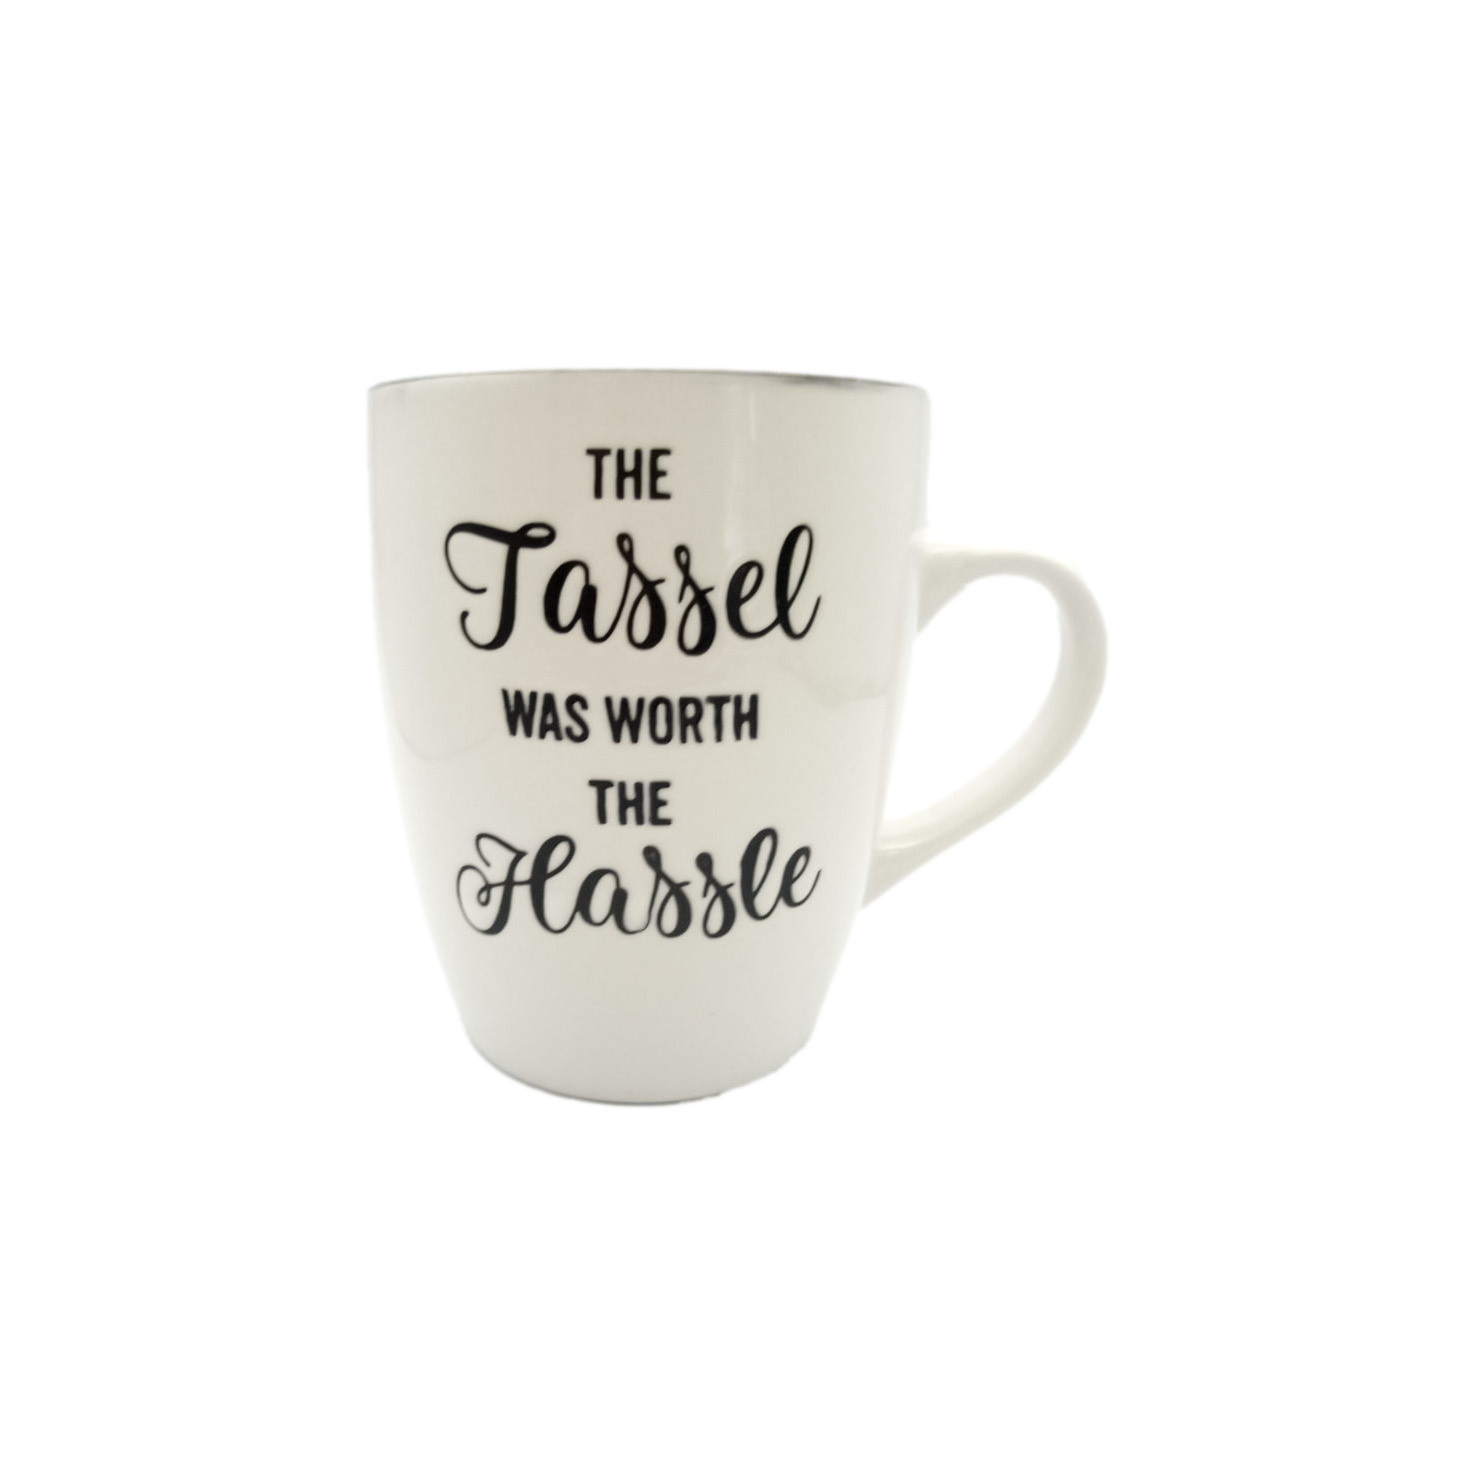 the tassle was worth the hassle mug